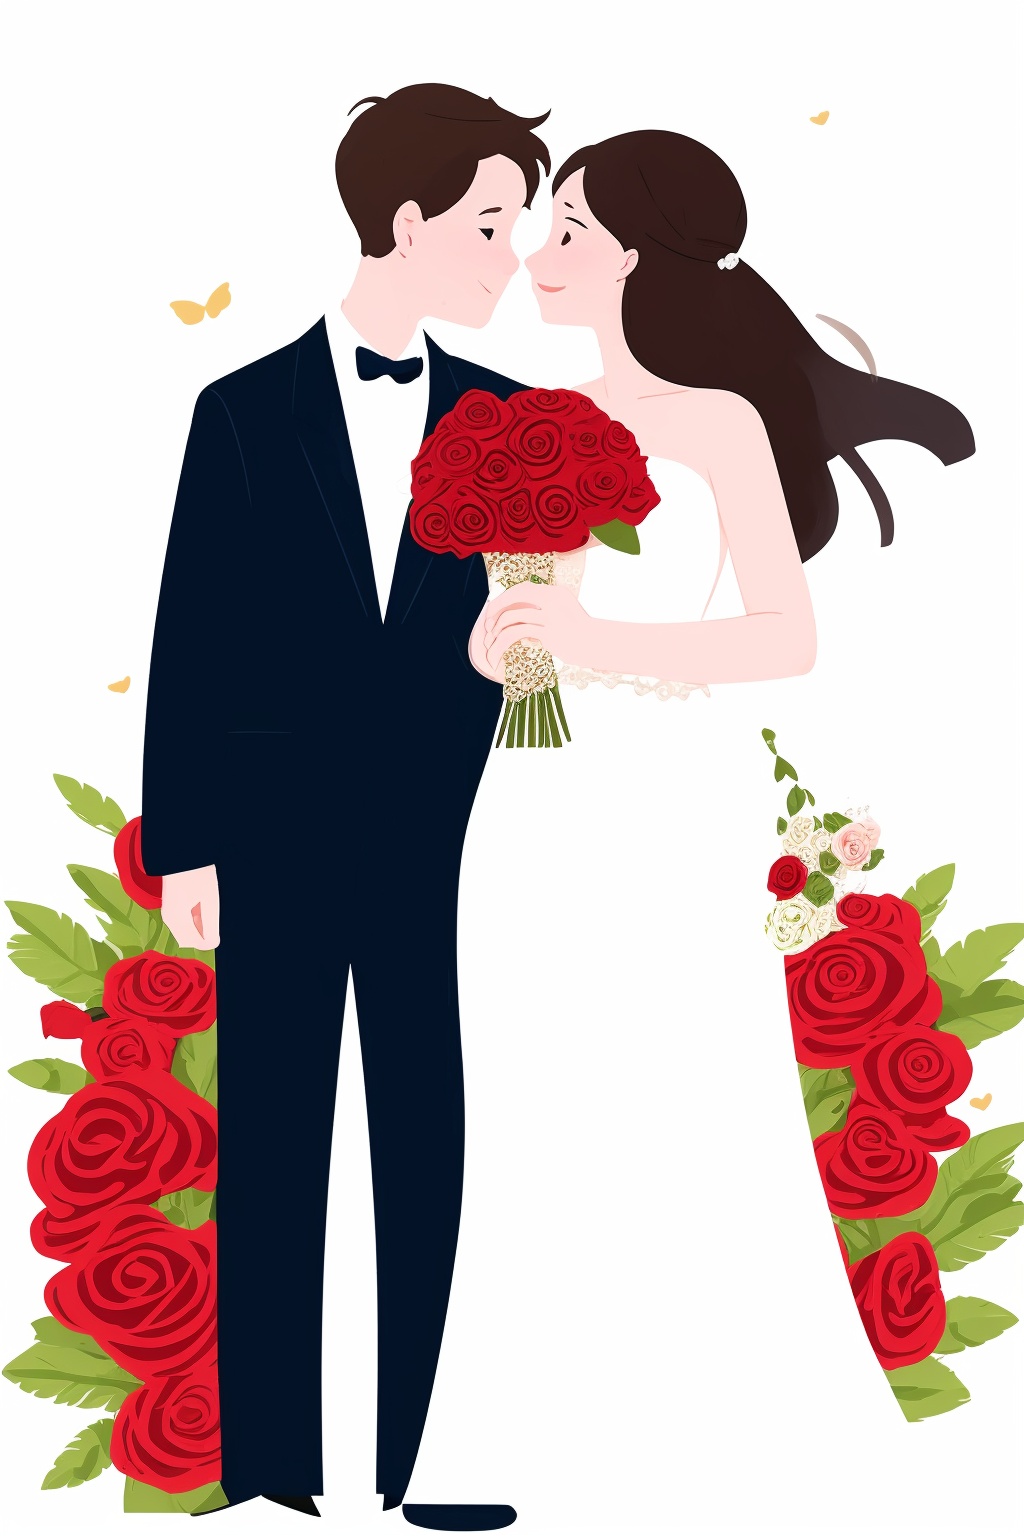 Valentine's Day,Flat painted style,1girl,1boy,rose,wedding_dress,simple background,<lora:lbc_Valentine's Day-ts:1.1>,love,romantism,masterpiece,